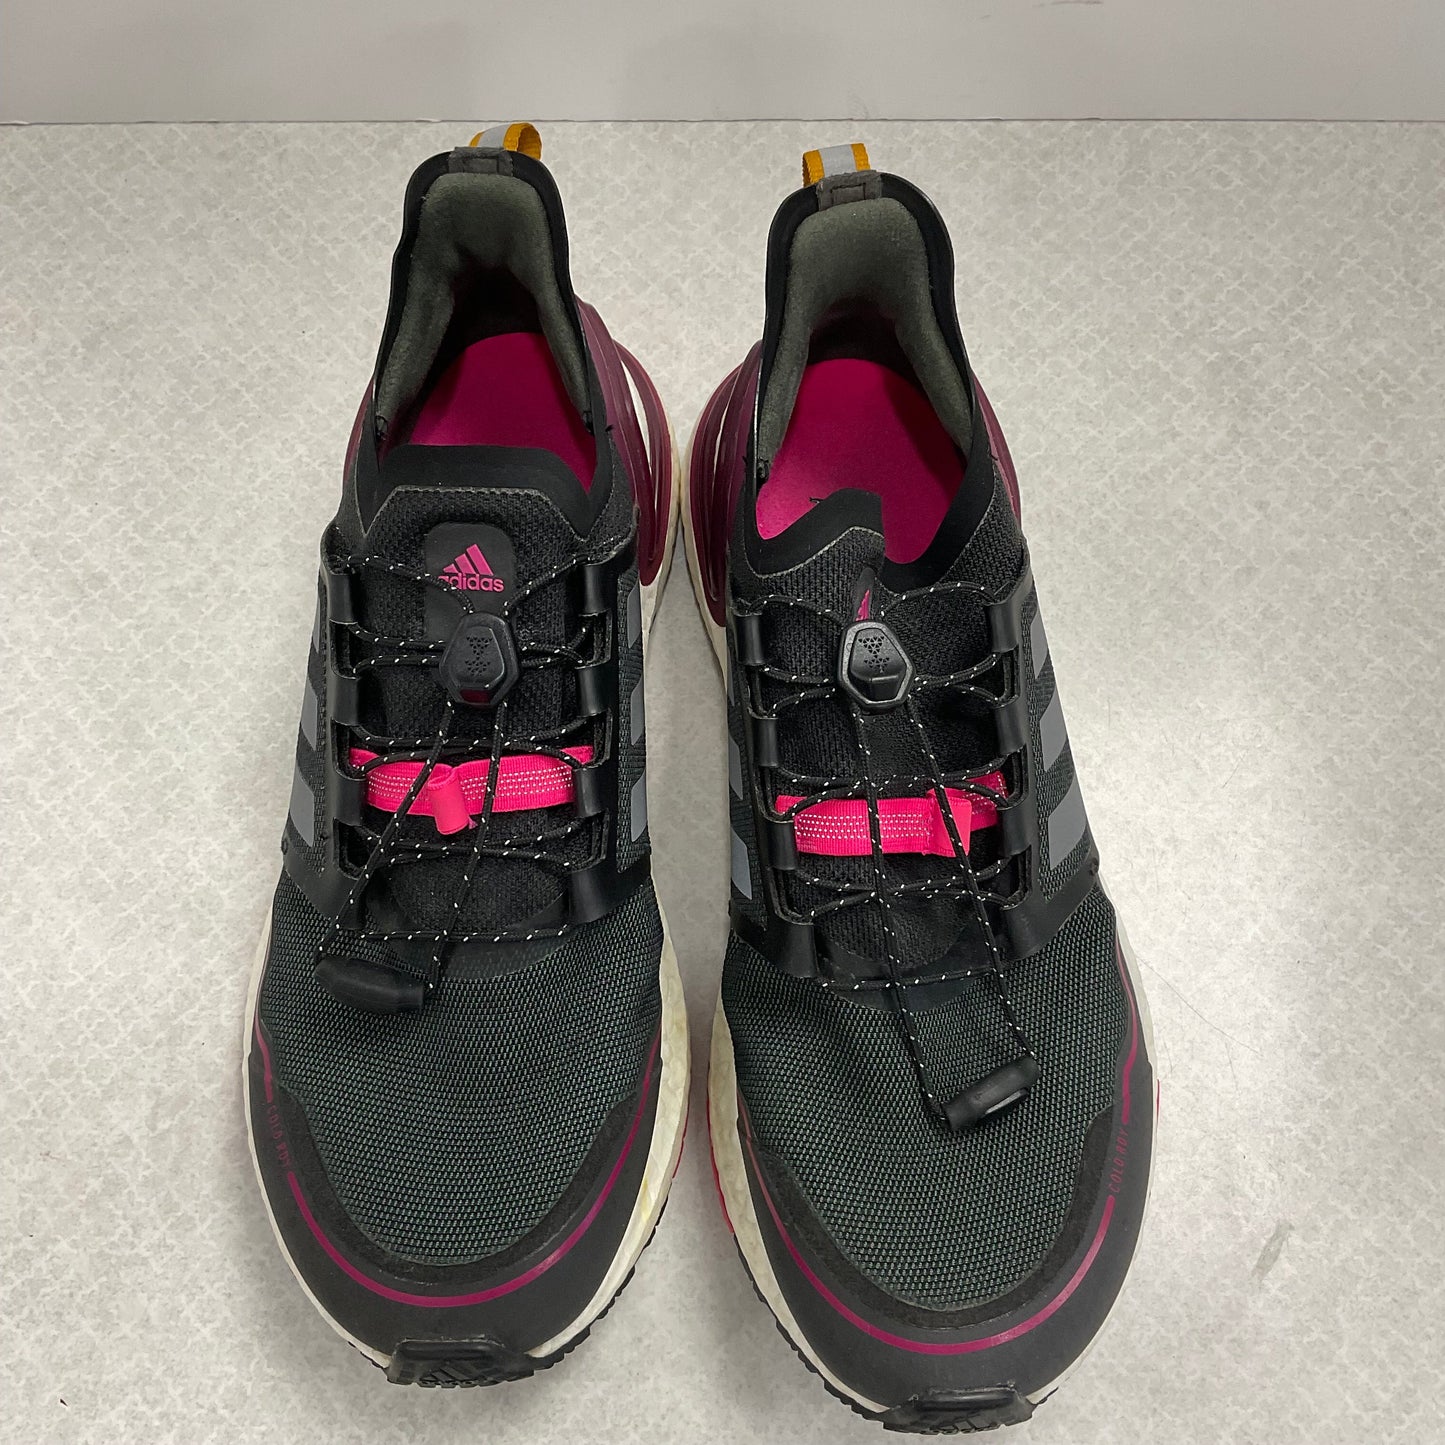 Black & Purple Shoes Athletic Adidas, Size 10.5